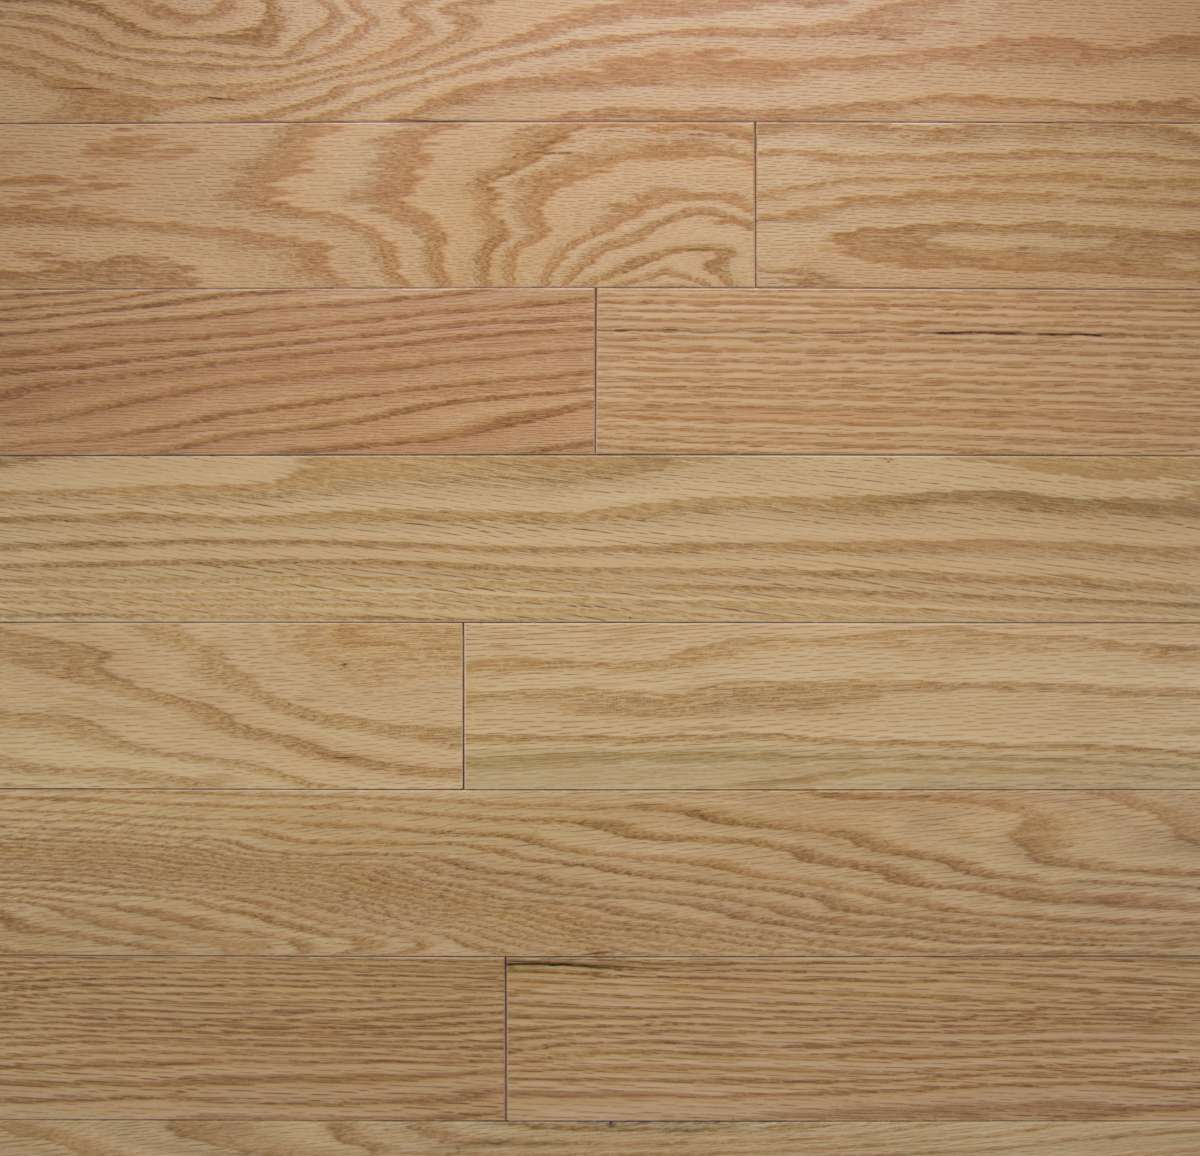 Somerset Hardwood Flooring, Pete’s Hardwood Floors